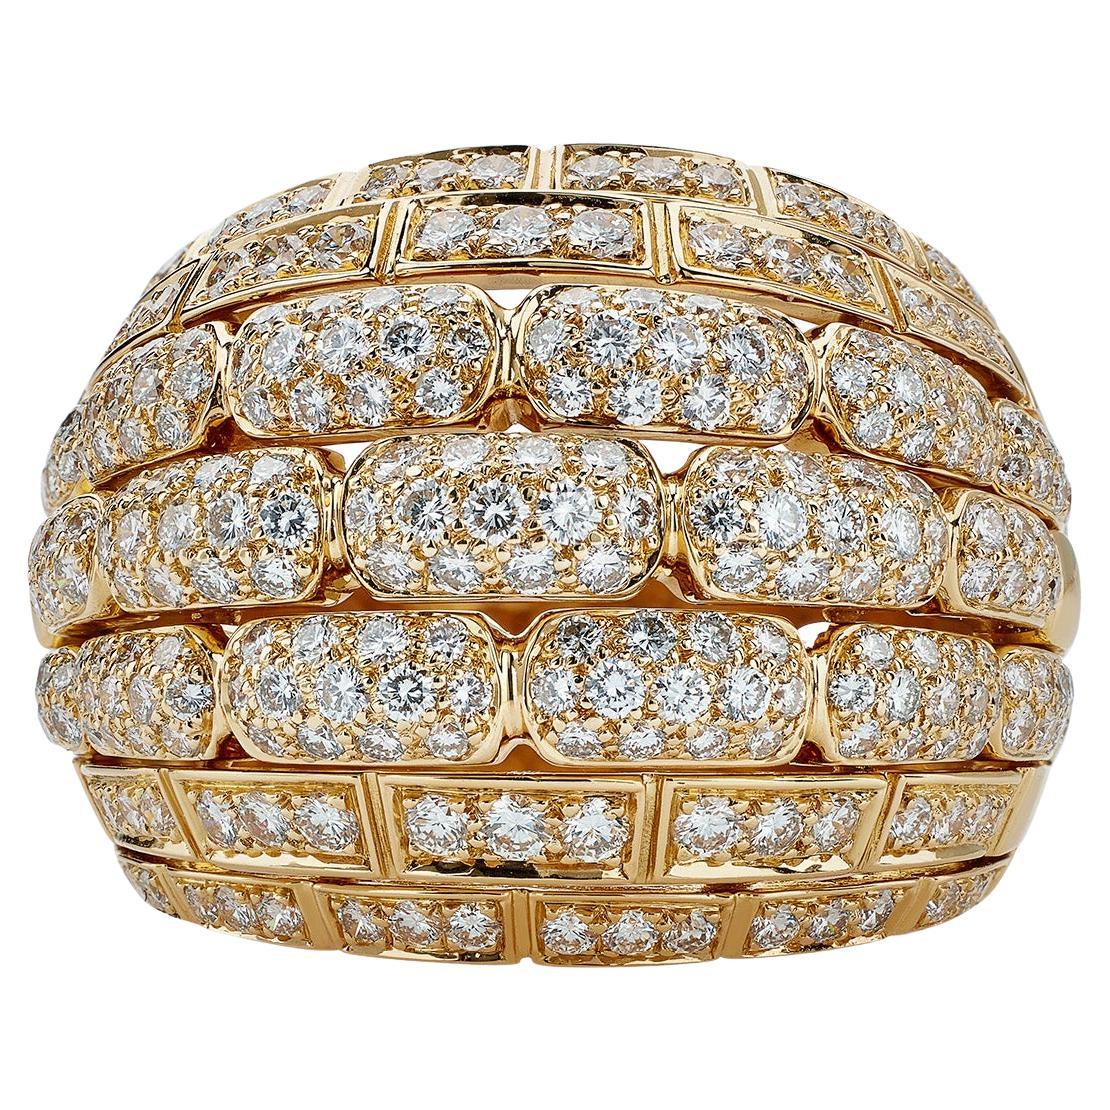 Cartier Paris 18K Gold and Diamond "Maillon Panthère" Bombé Ring